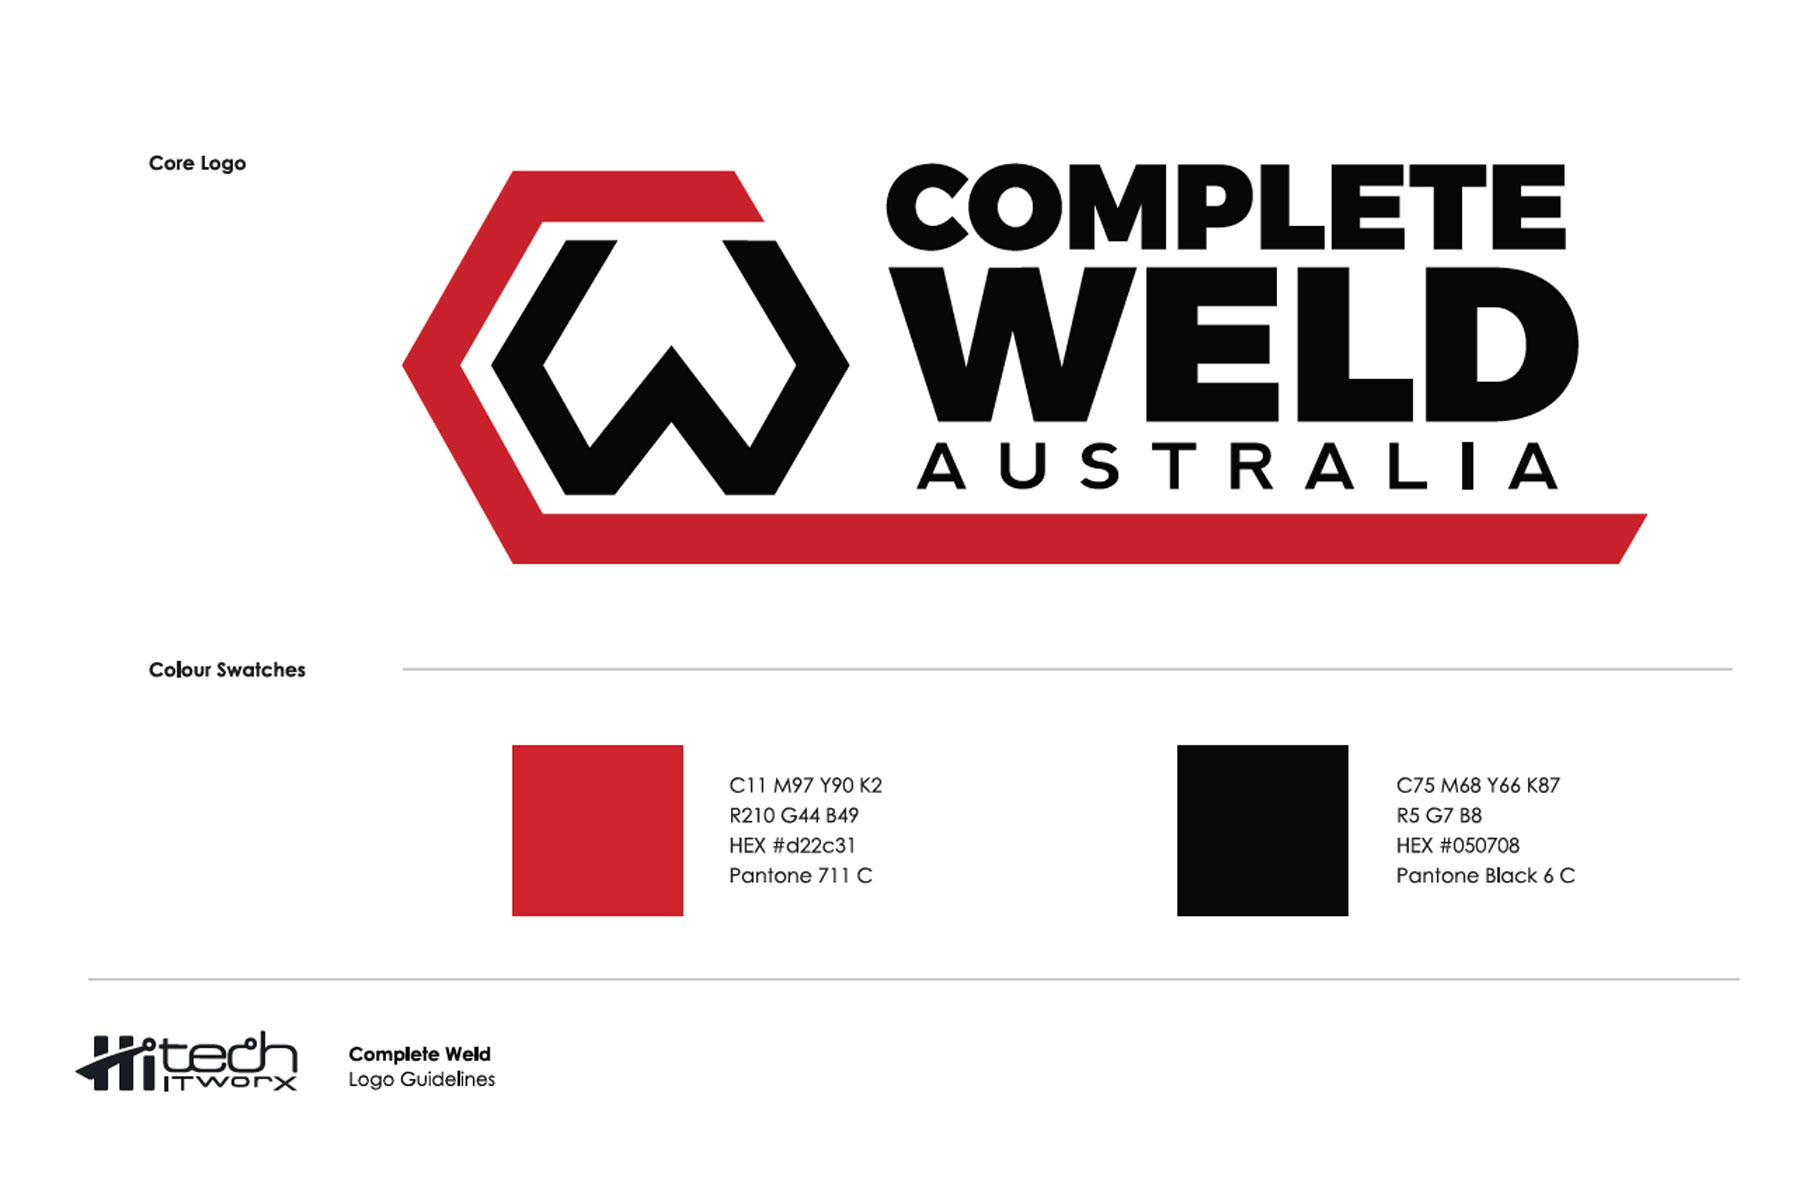 Complete Weld Australia logo guidelines